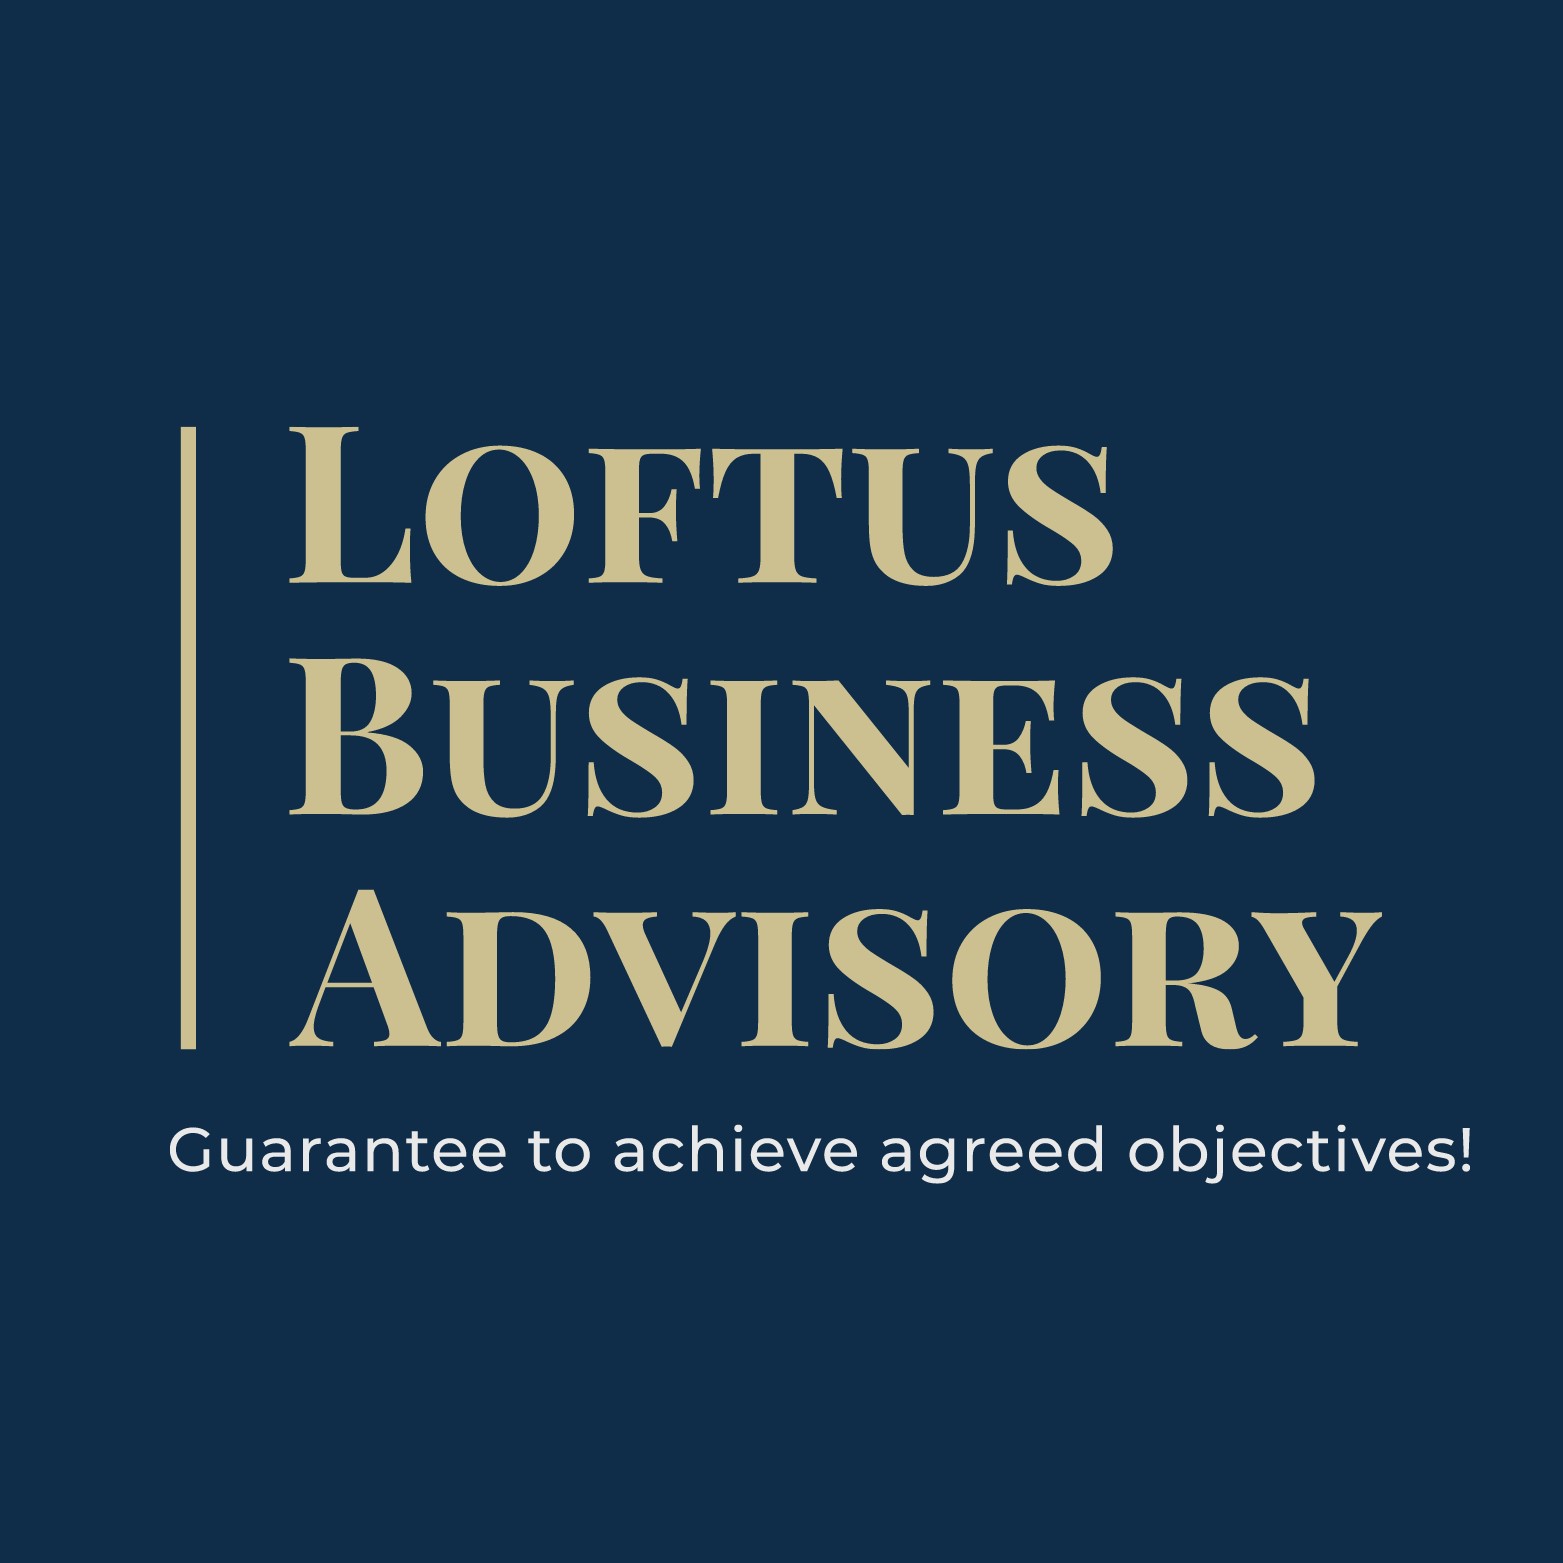 Loftus Business Advisory